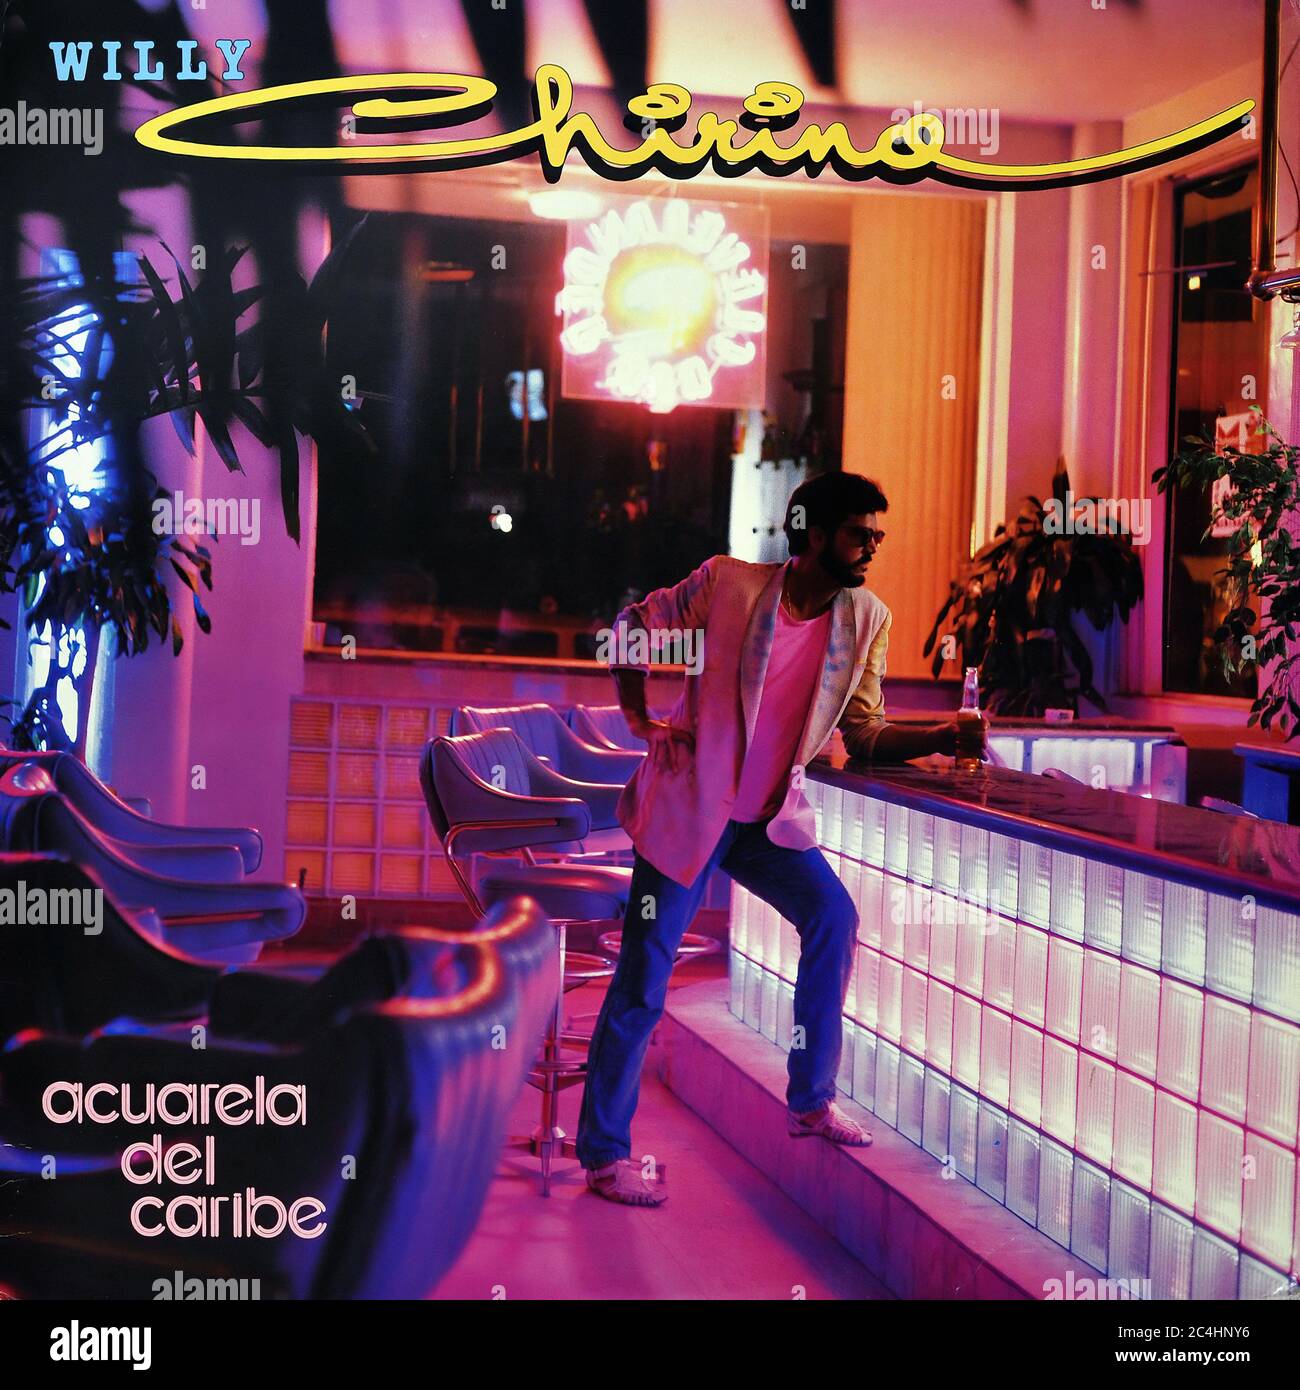 Willy Chirino Acuarela Del Caribe 12'' Lp Vinyl - Vintage Record Cover Stock Photo